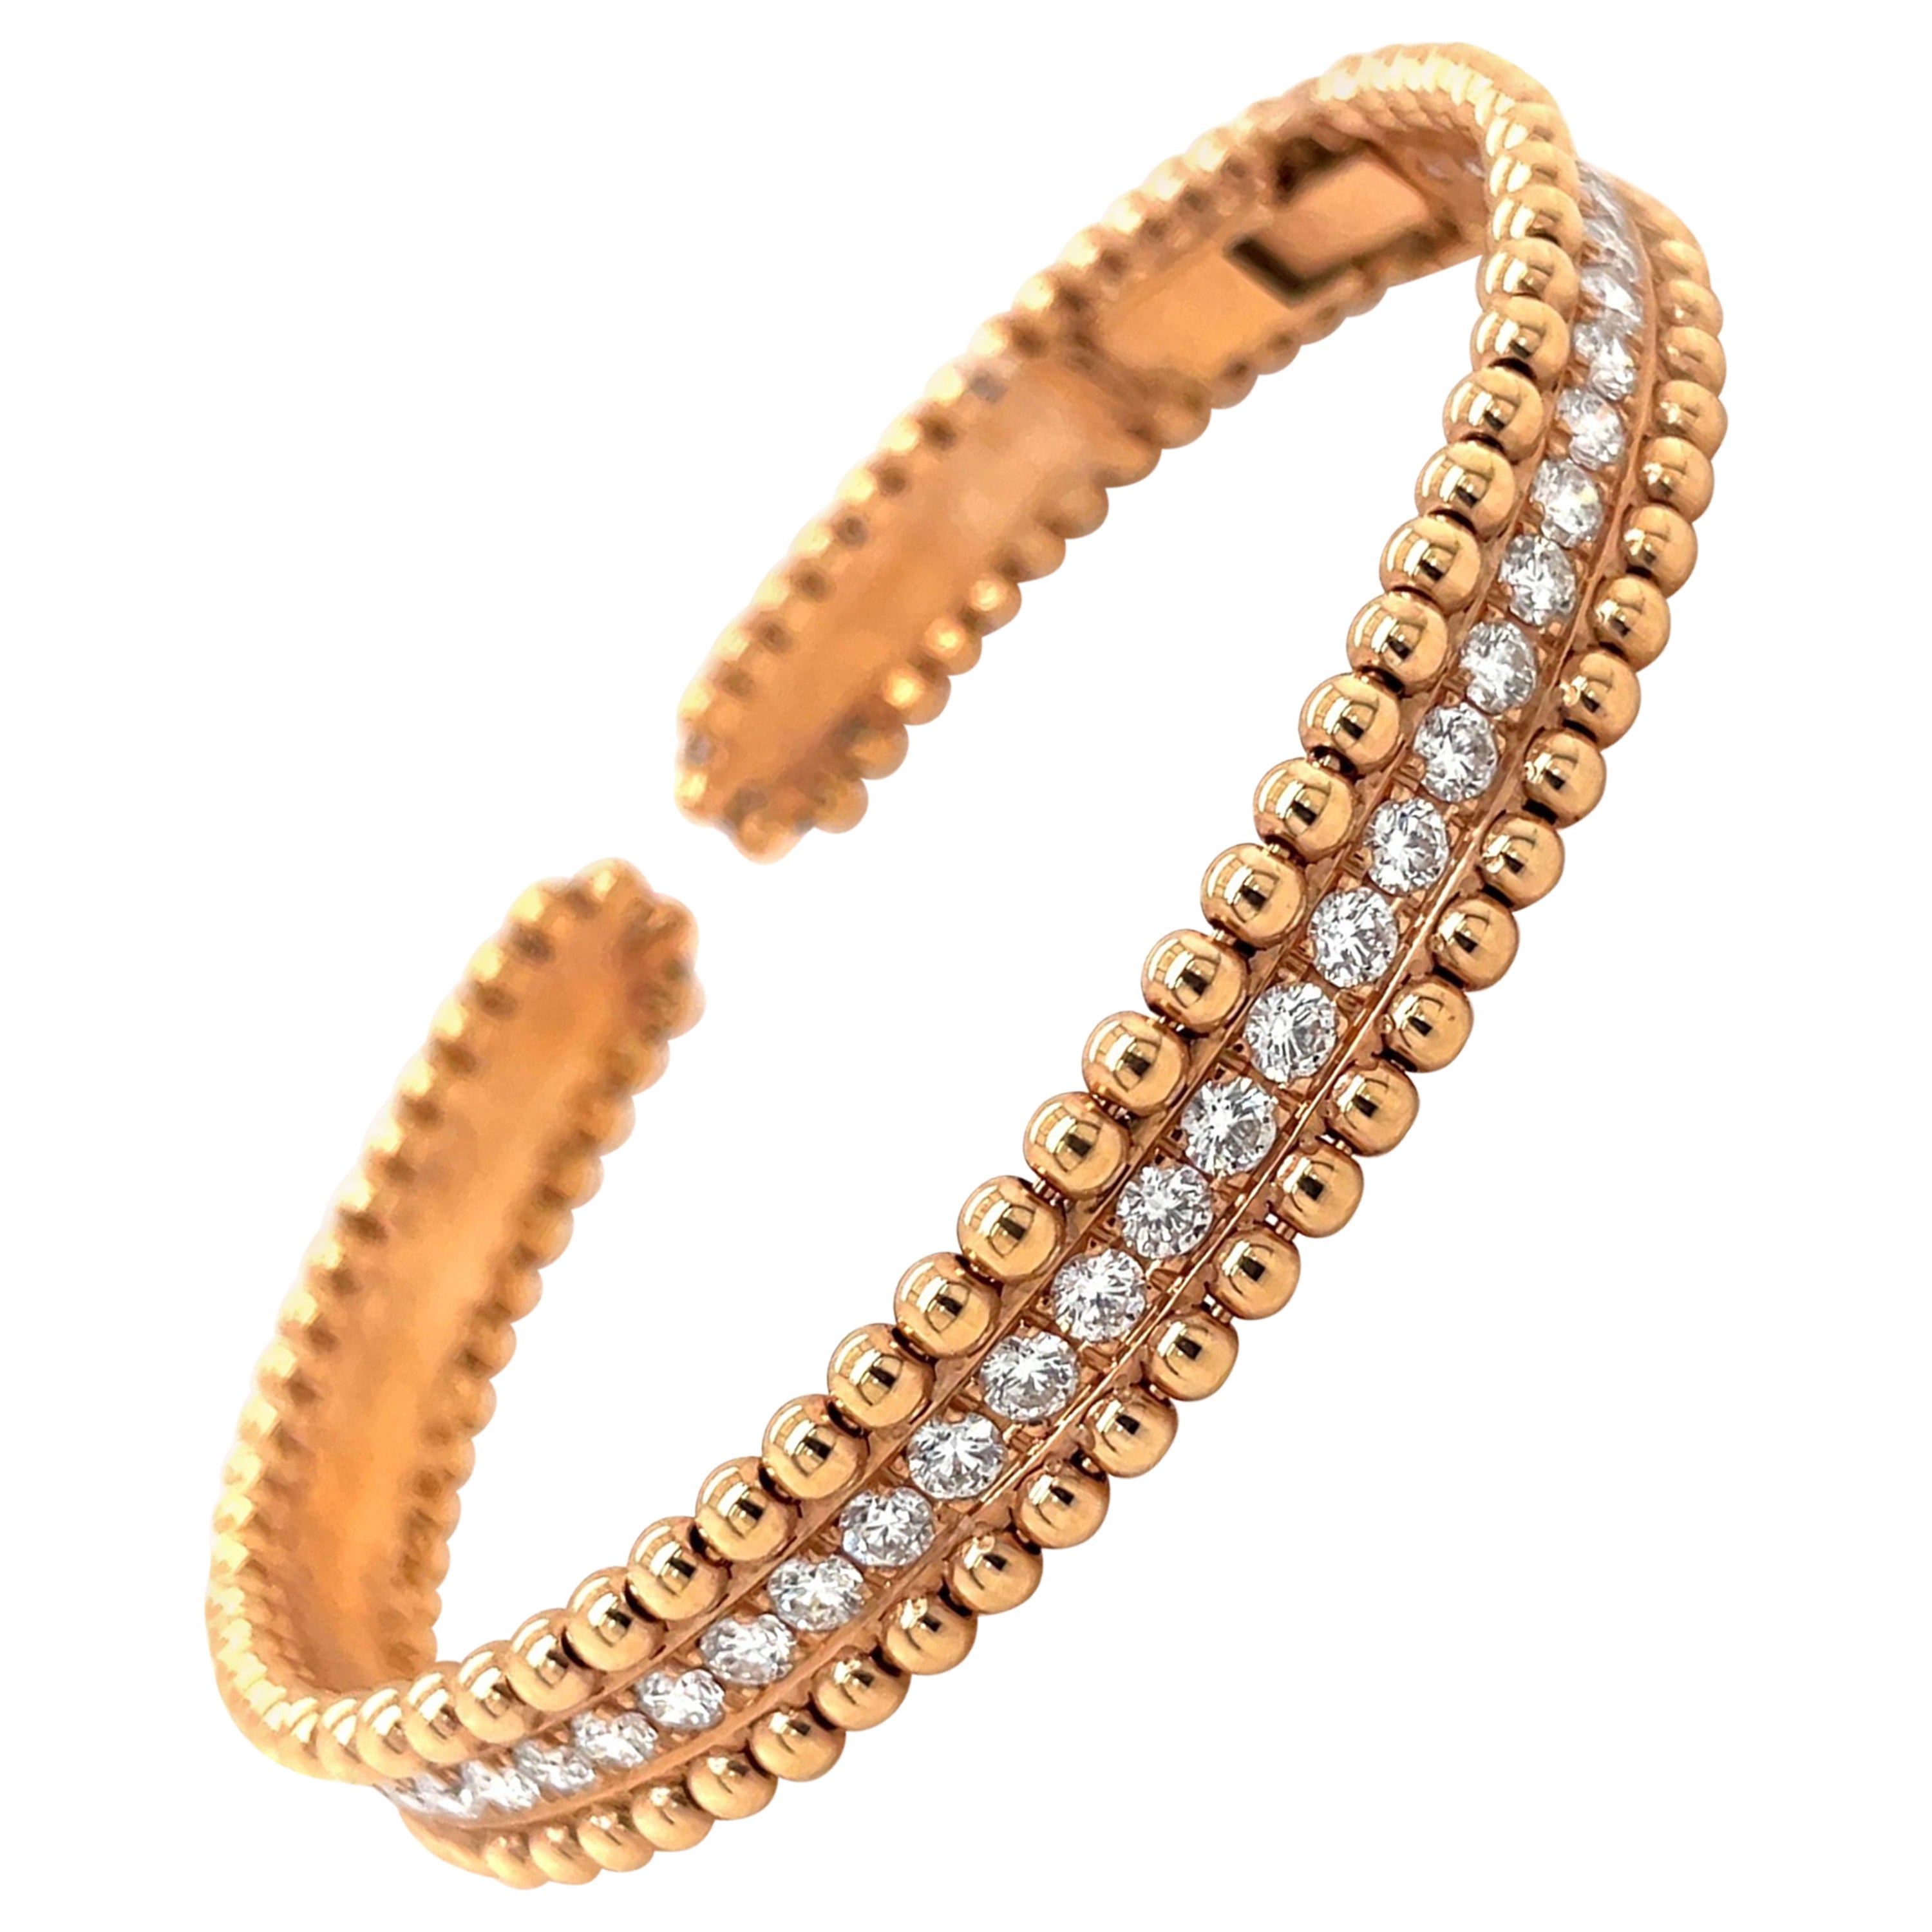 18KT Rose Gold 1.85Ct Diamond Bracelet with Beaded Edge